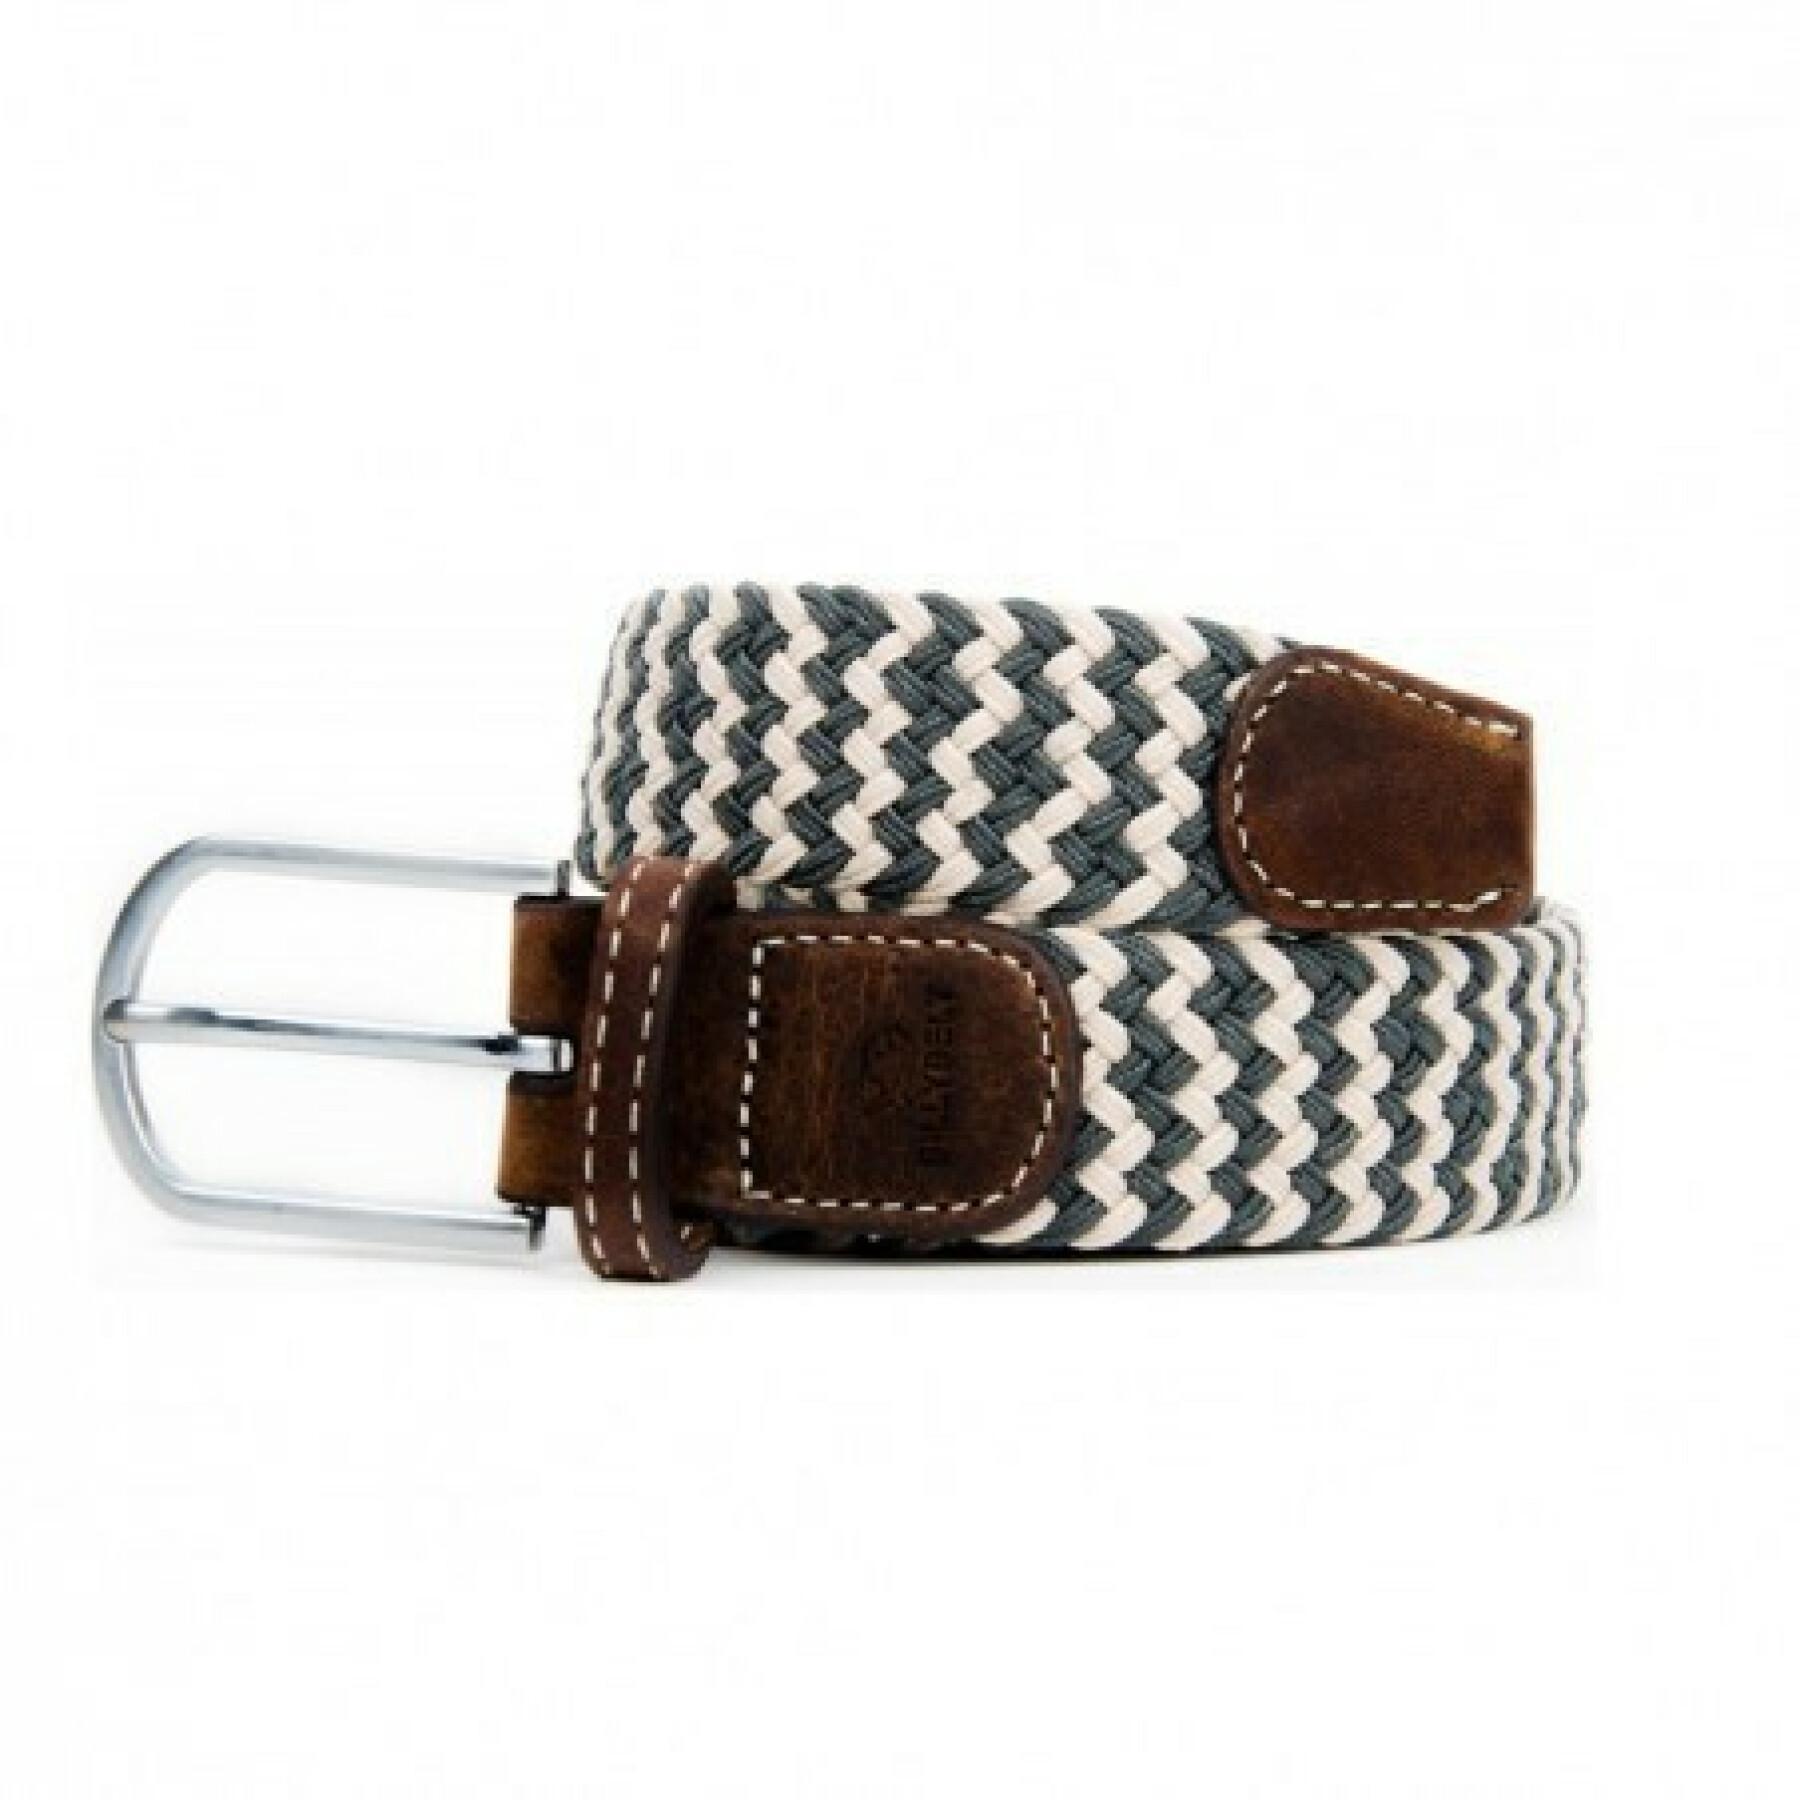 Elastic braided belt Billybelt La panama